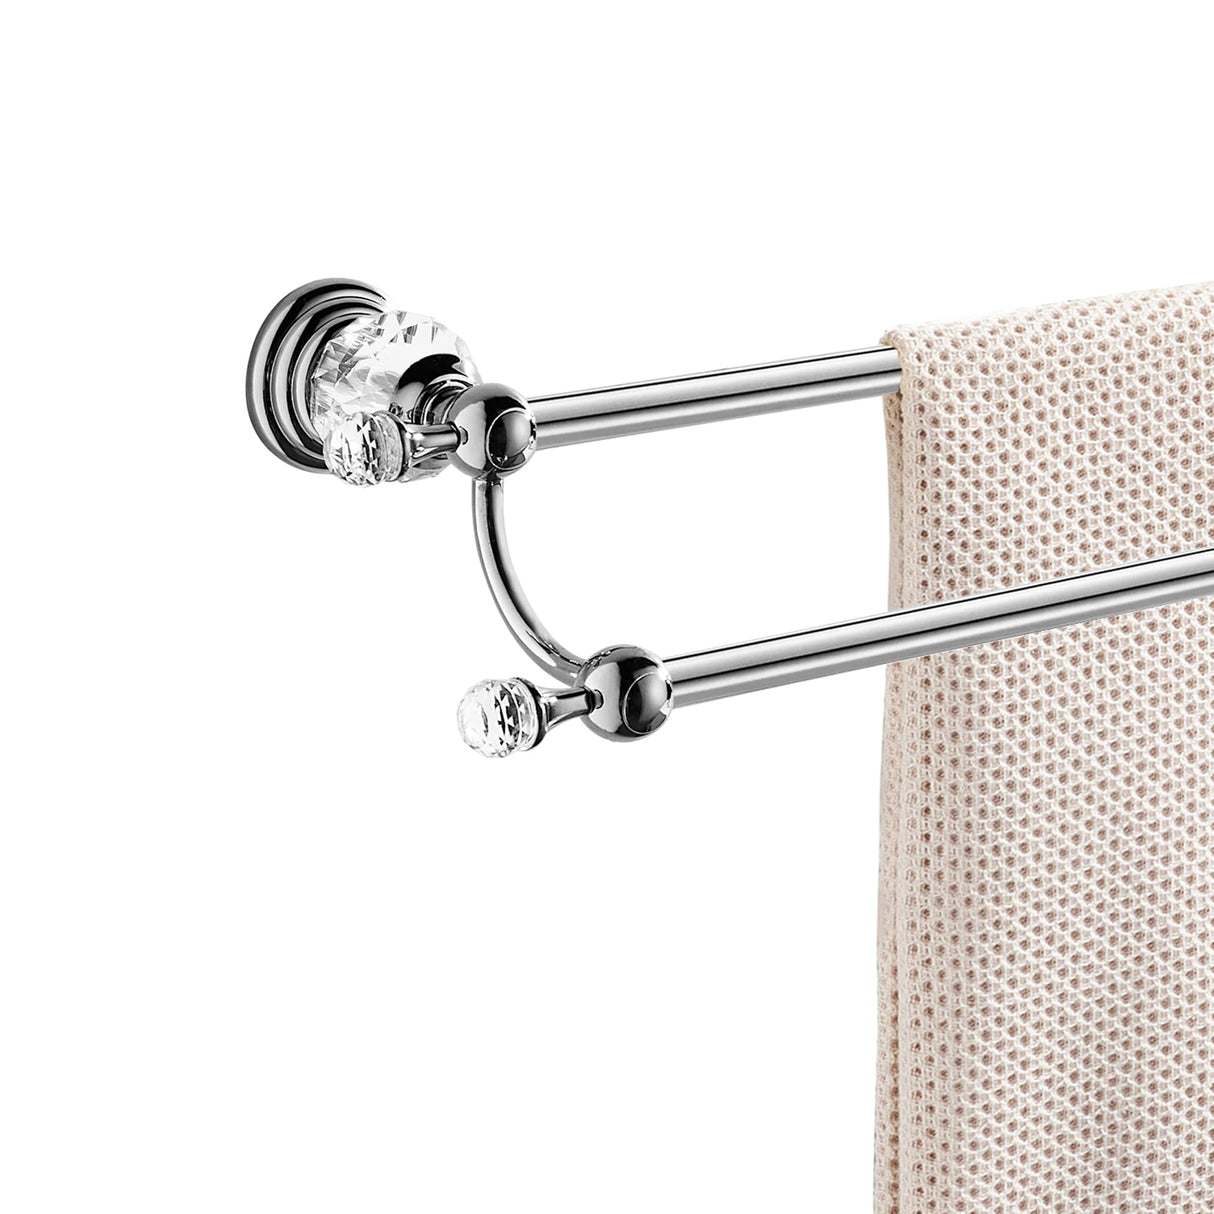 WINCASE Chrome Towel Bar, Double Towel Holder 24 Inch, Silver Crystal Bathroom Towel Racks Wall Mounted